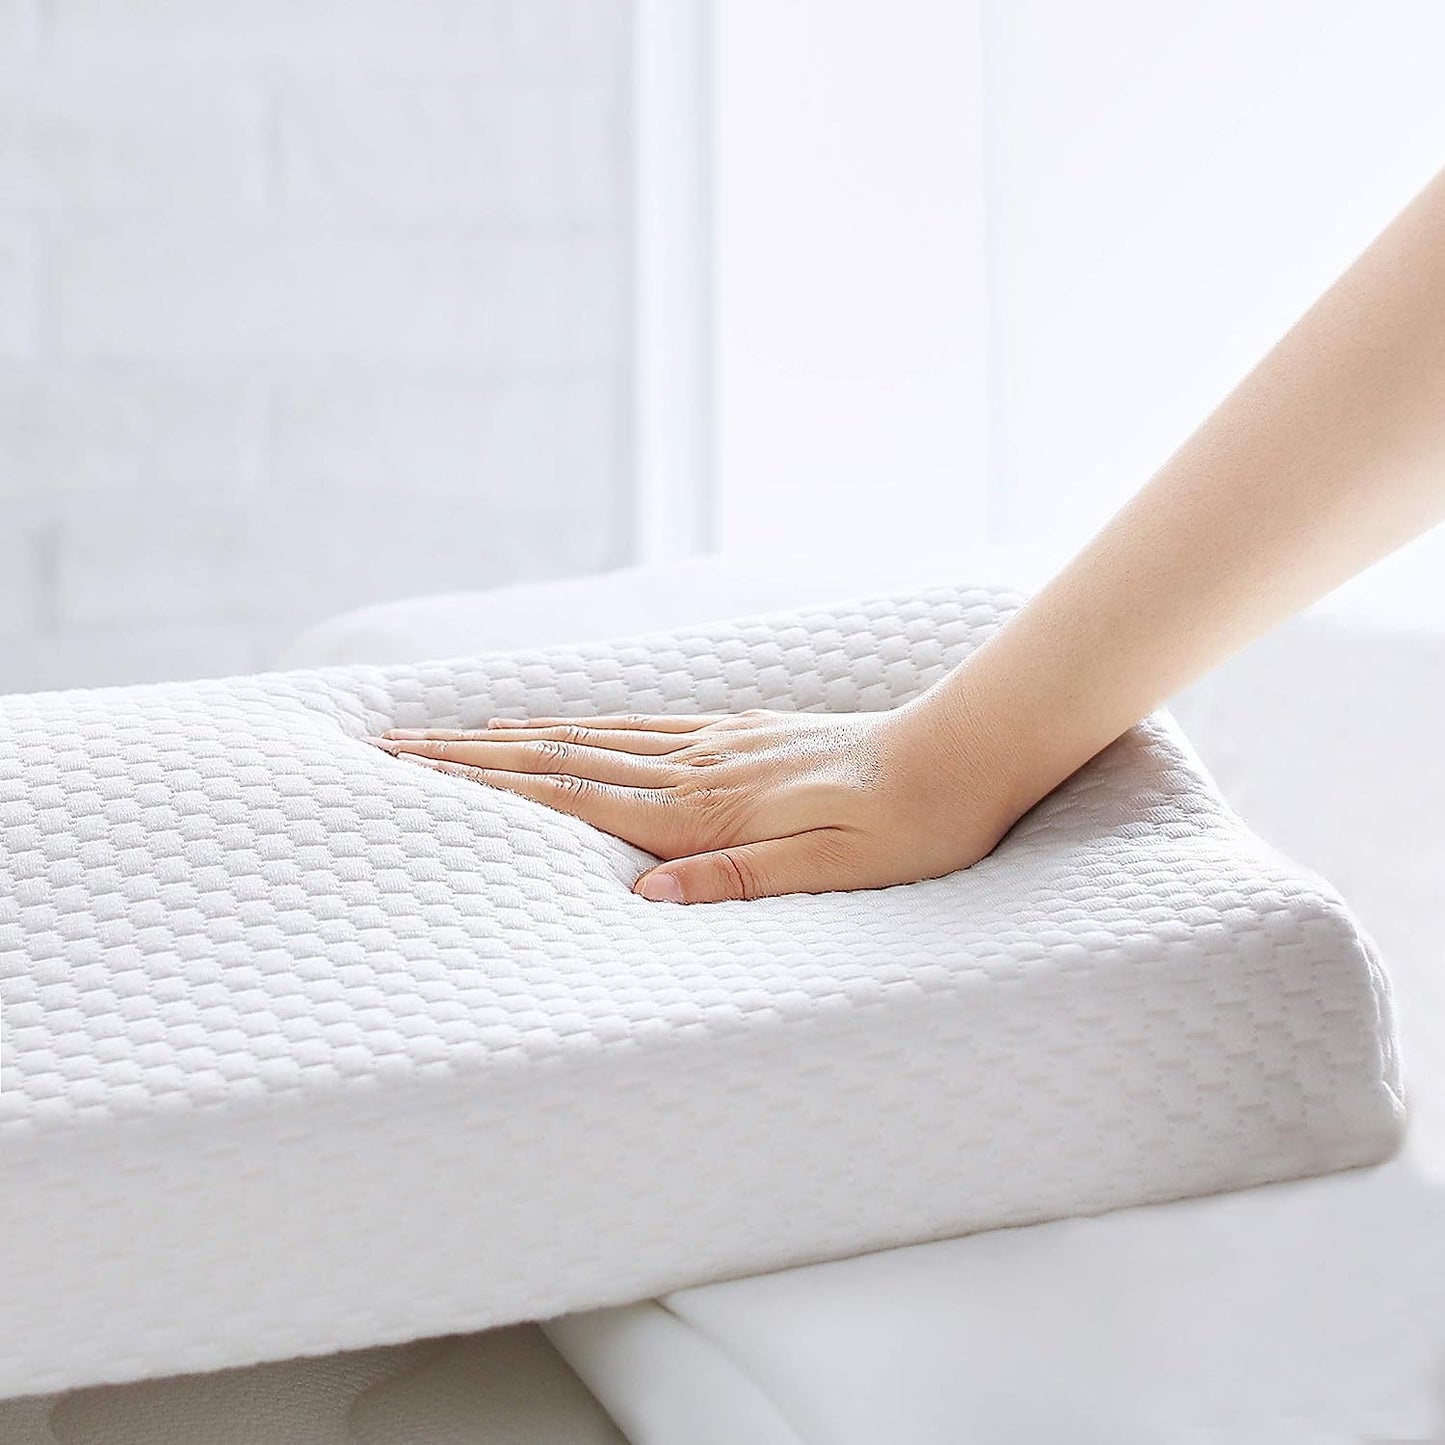 Basics Contour Memory Foam Pillow with Neck Support, 60 x 35 x 11/6 cm